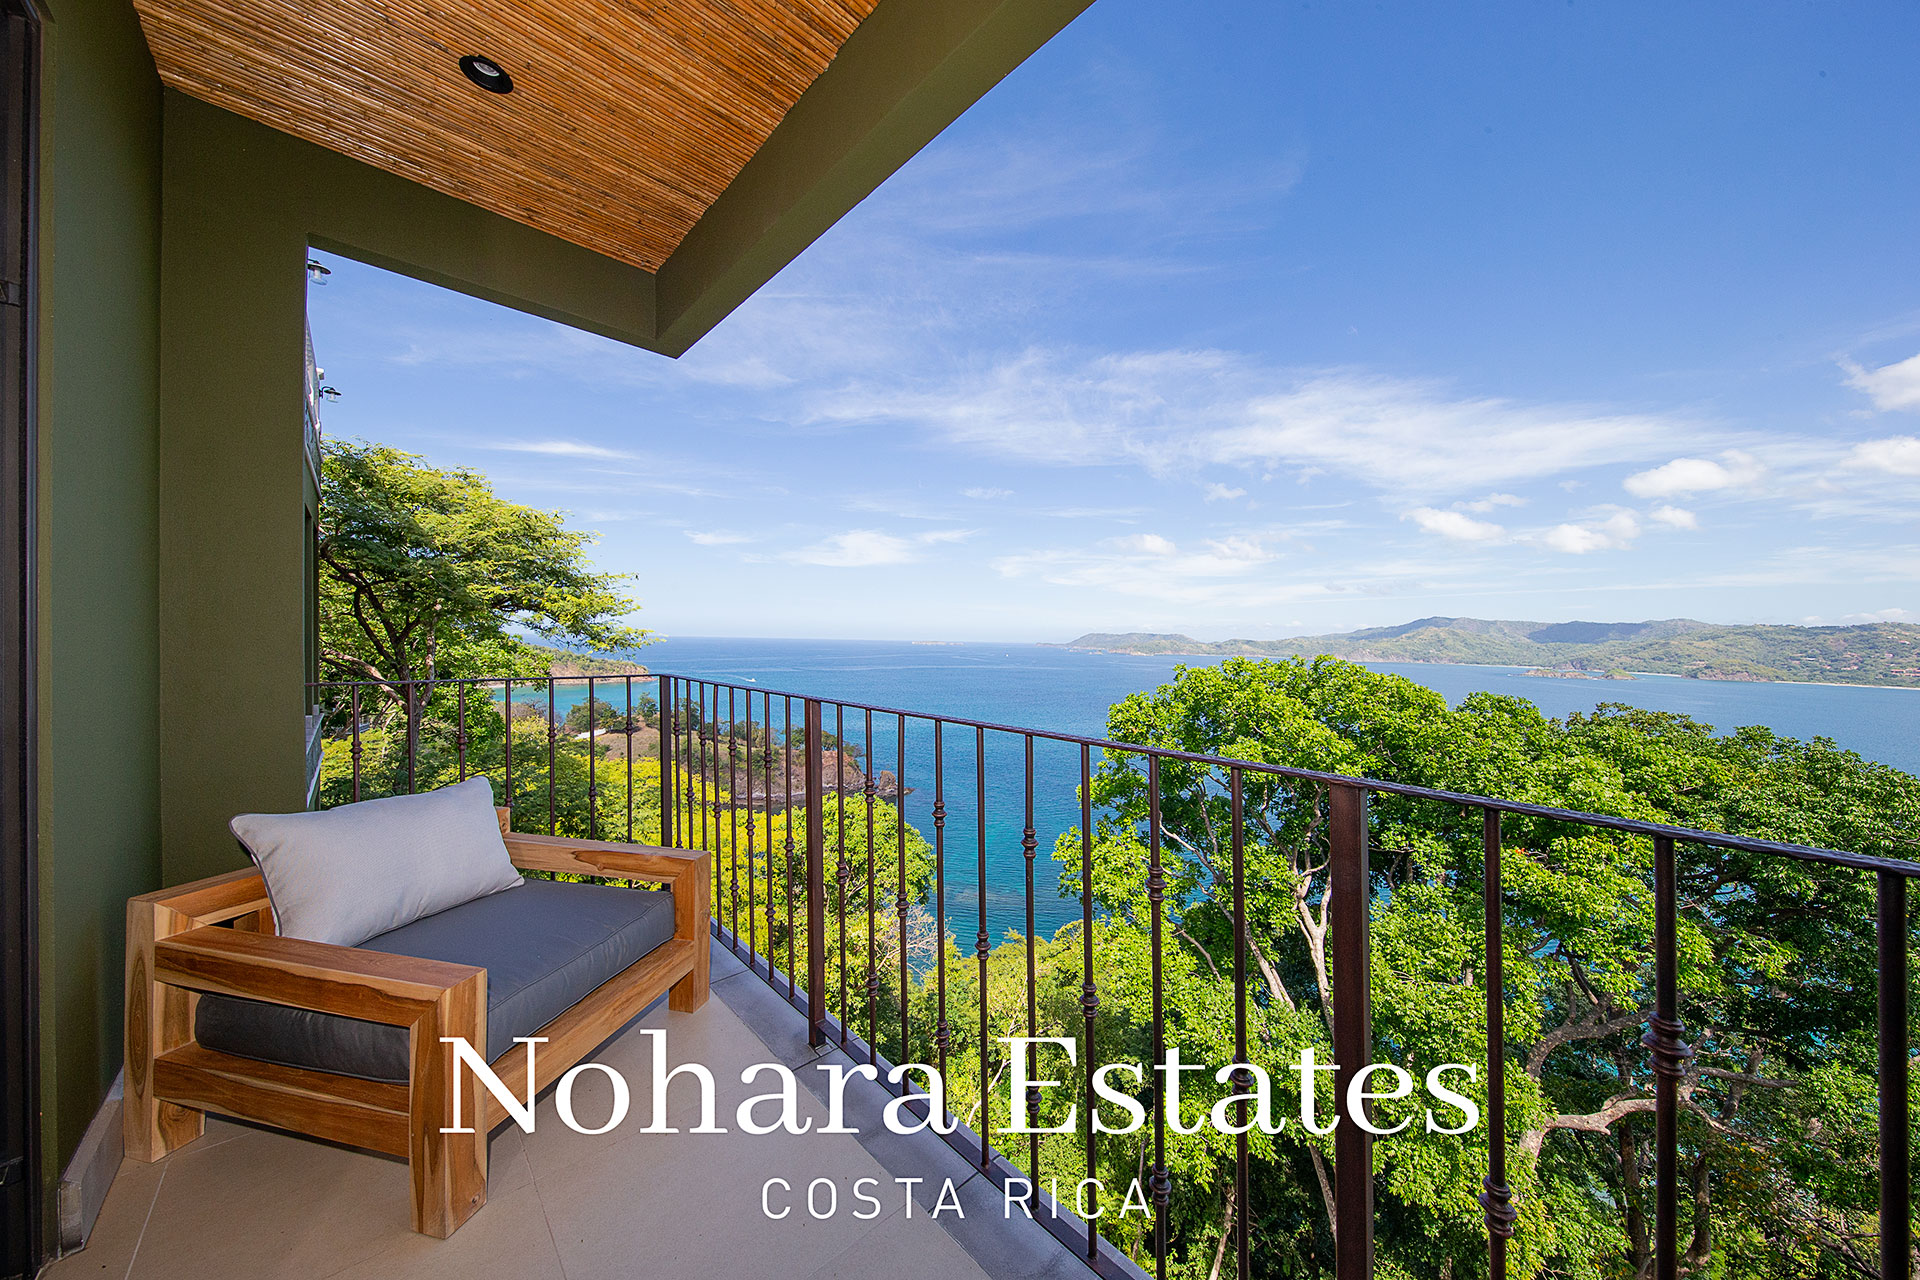 Nohara Estates Costa Rica 360 Esplendor Del Pacifico 7